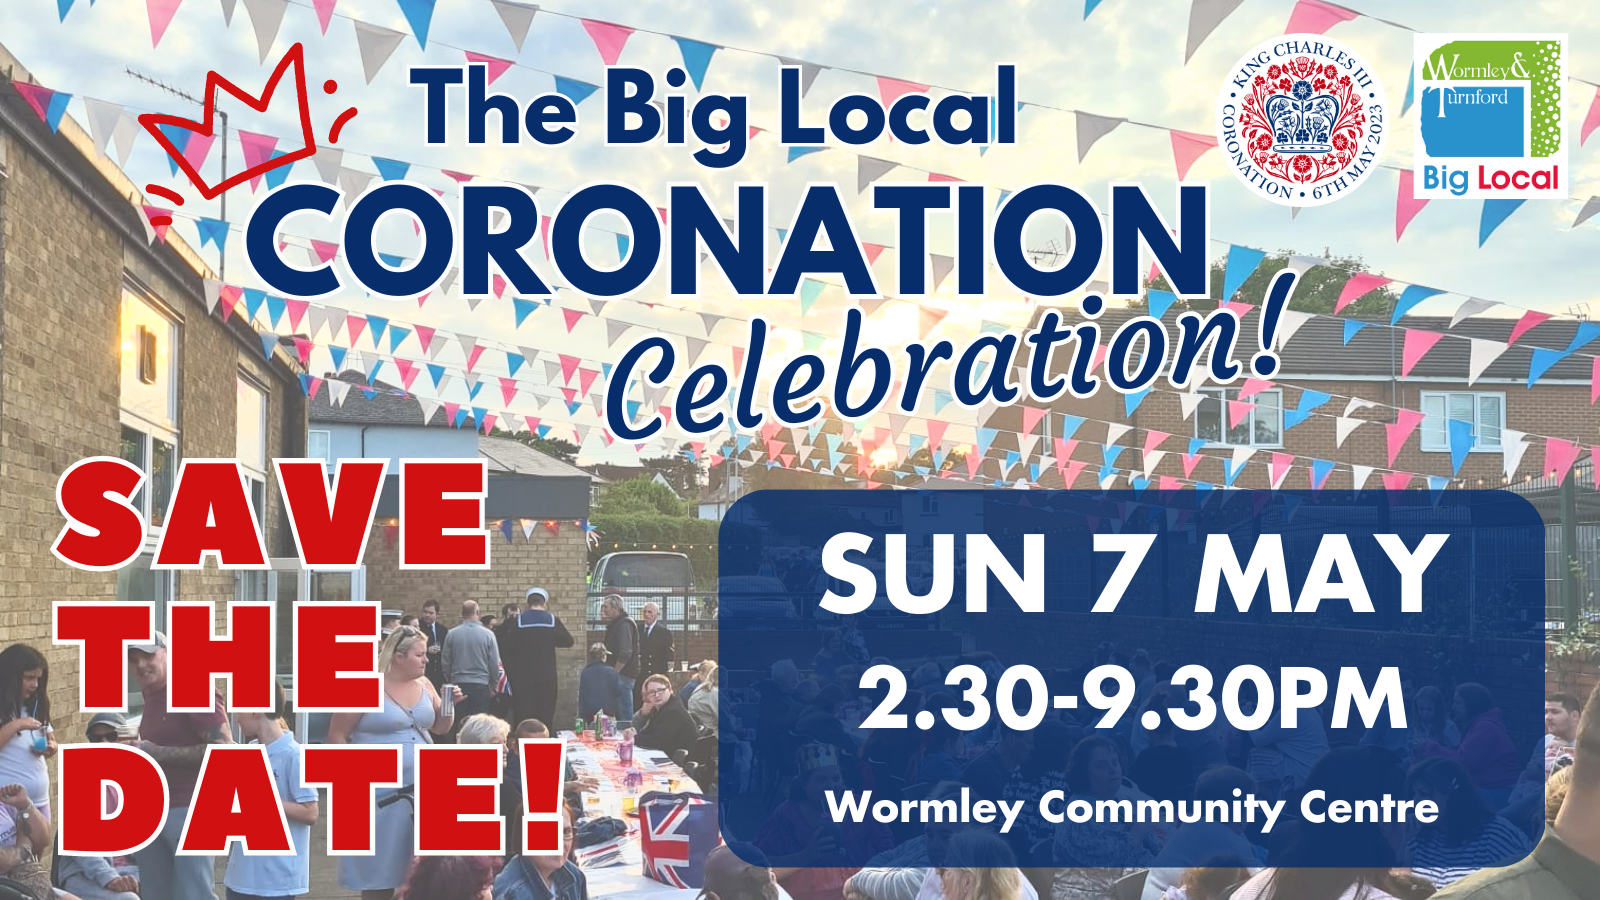 The Big Local Coronation Celebration Save the date